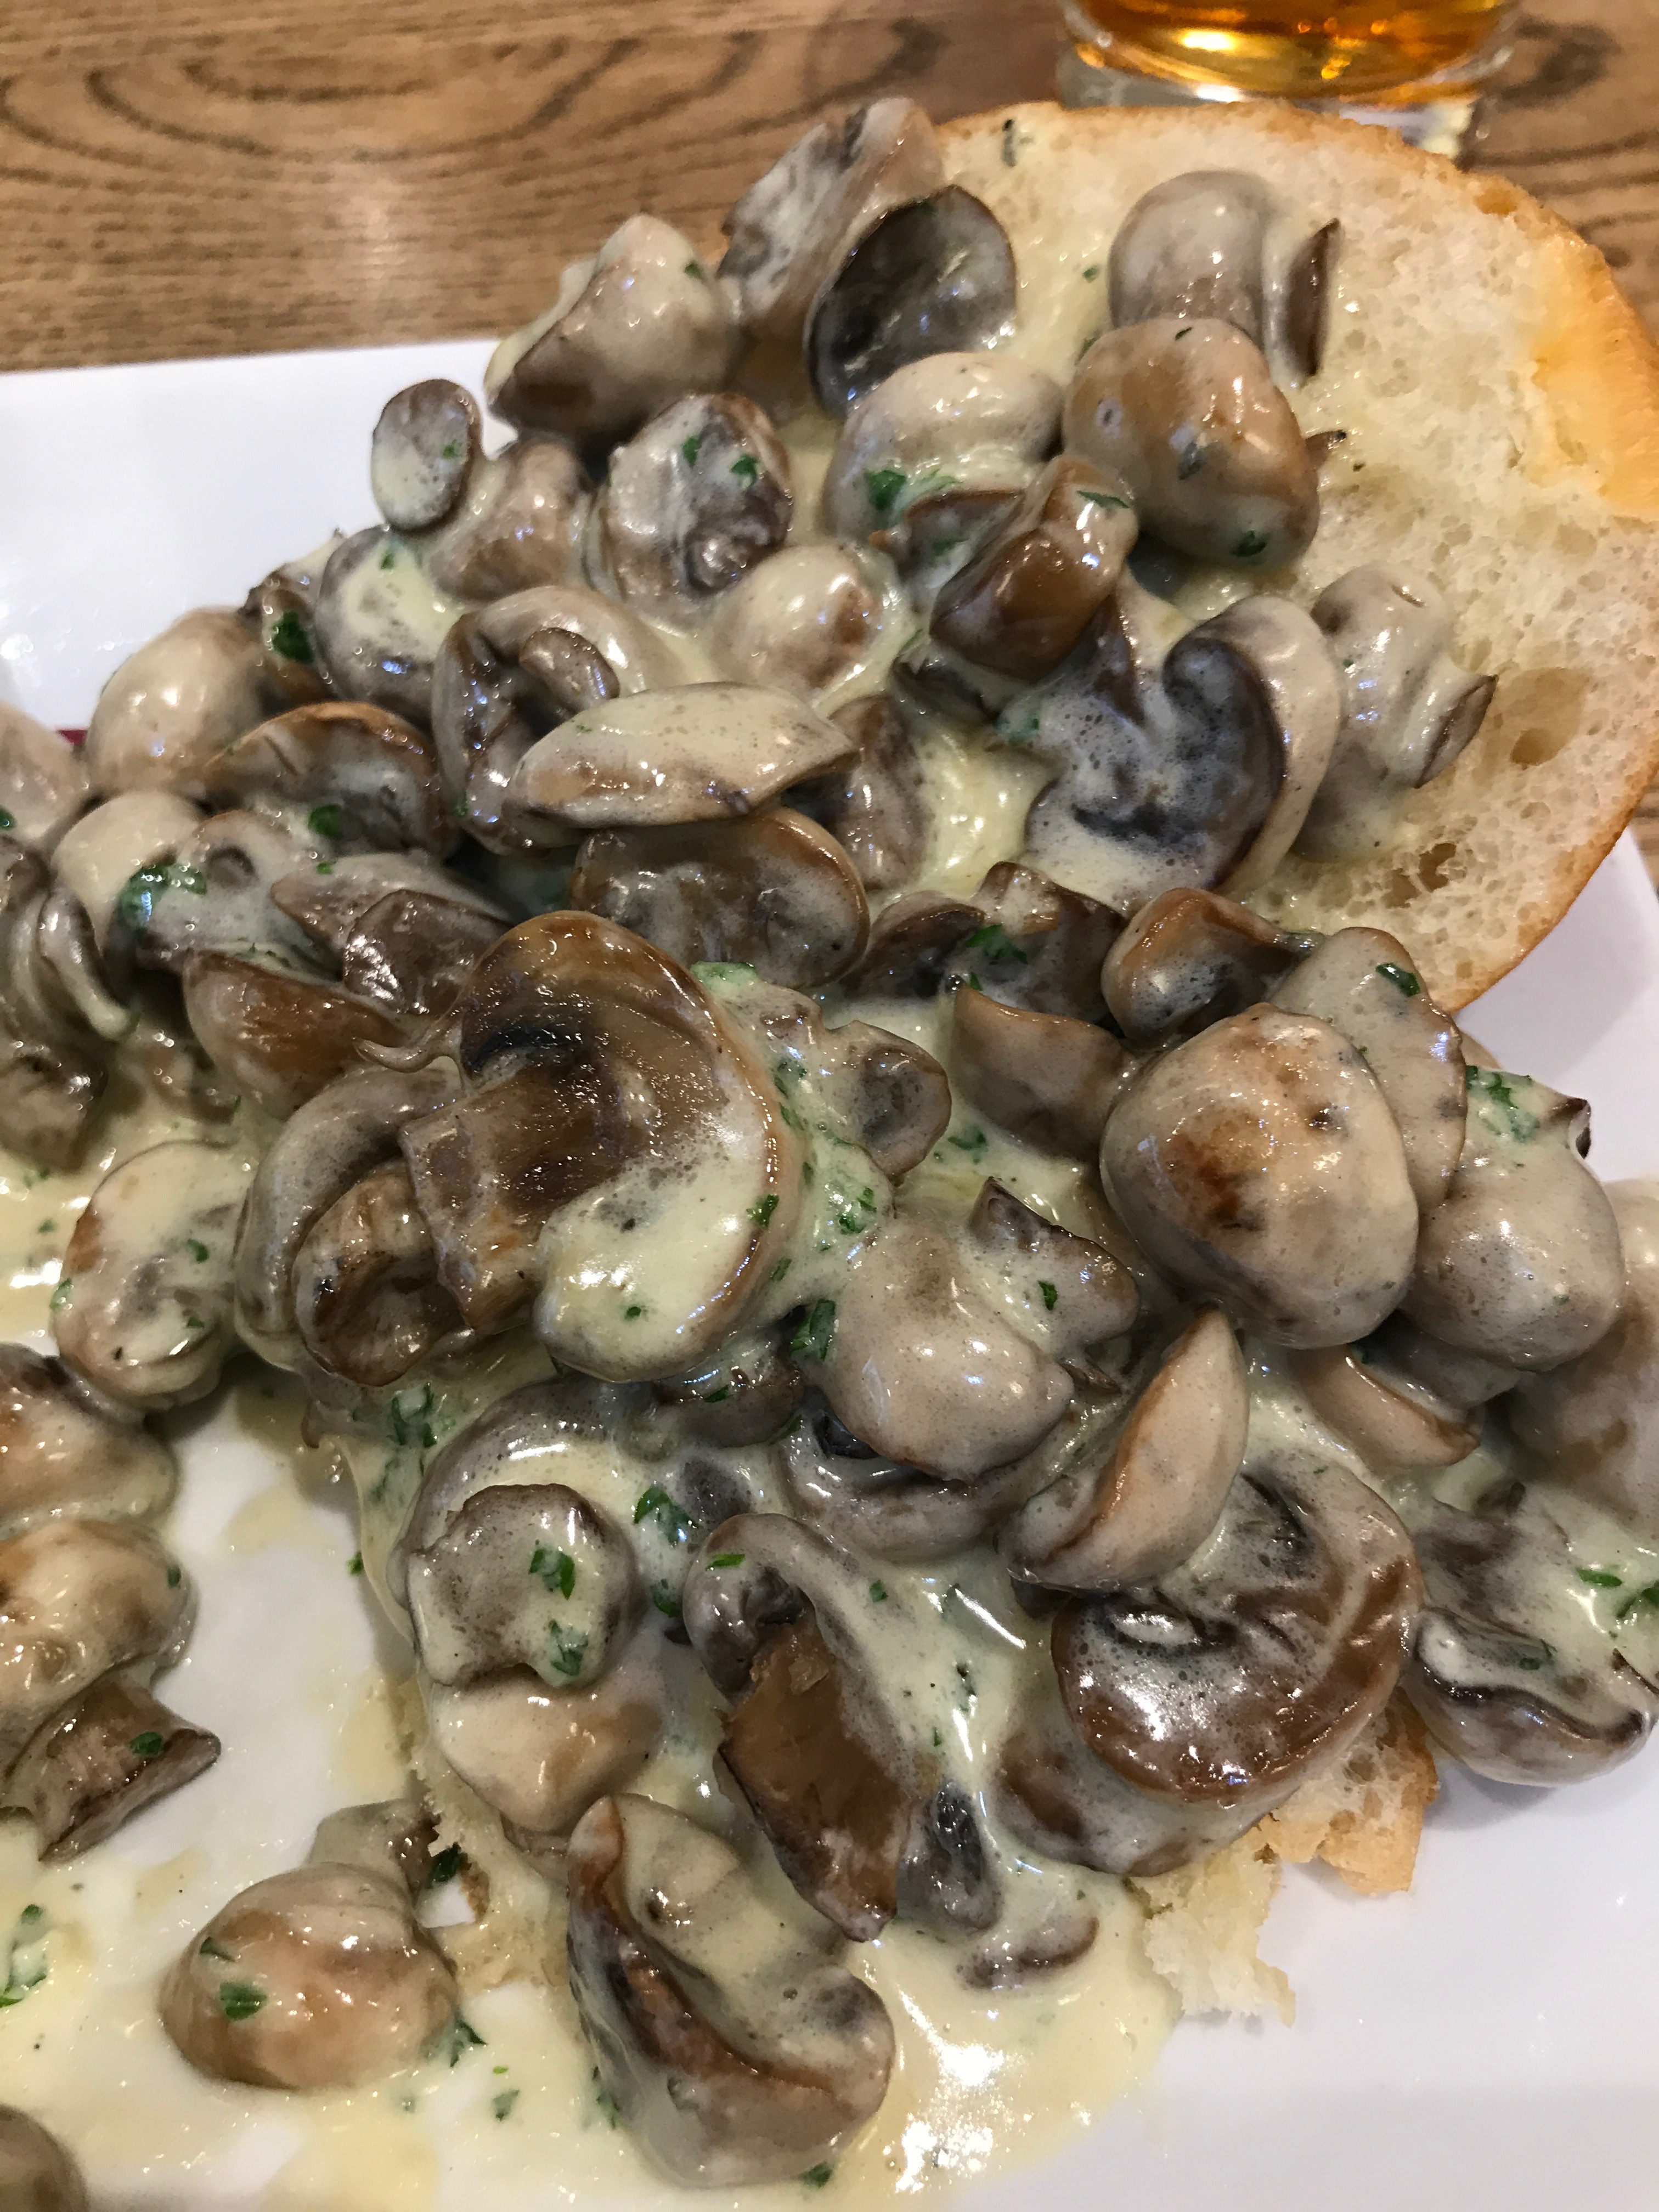 Roquefort and mushroom dish from DeGruchy's brasserie